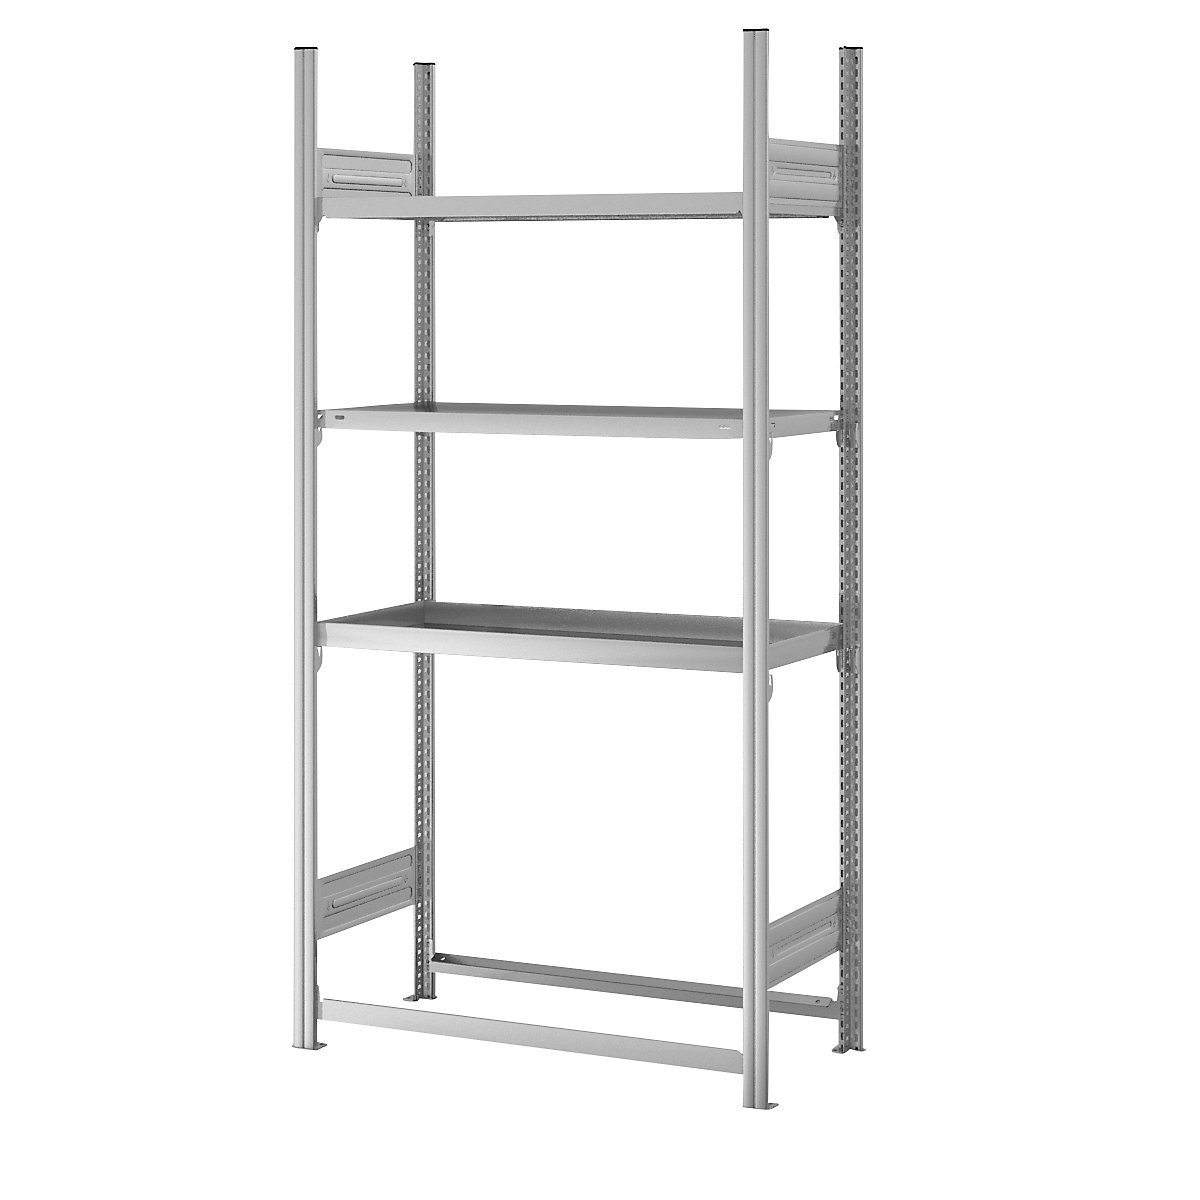 Warehouse and workshop multifunction shelf unit – hofe, height 2000 mm, 4 storage levels, standard shelf unit, WxD 1060 x 435 mm-2